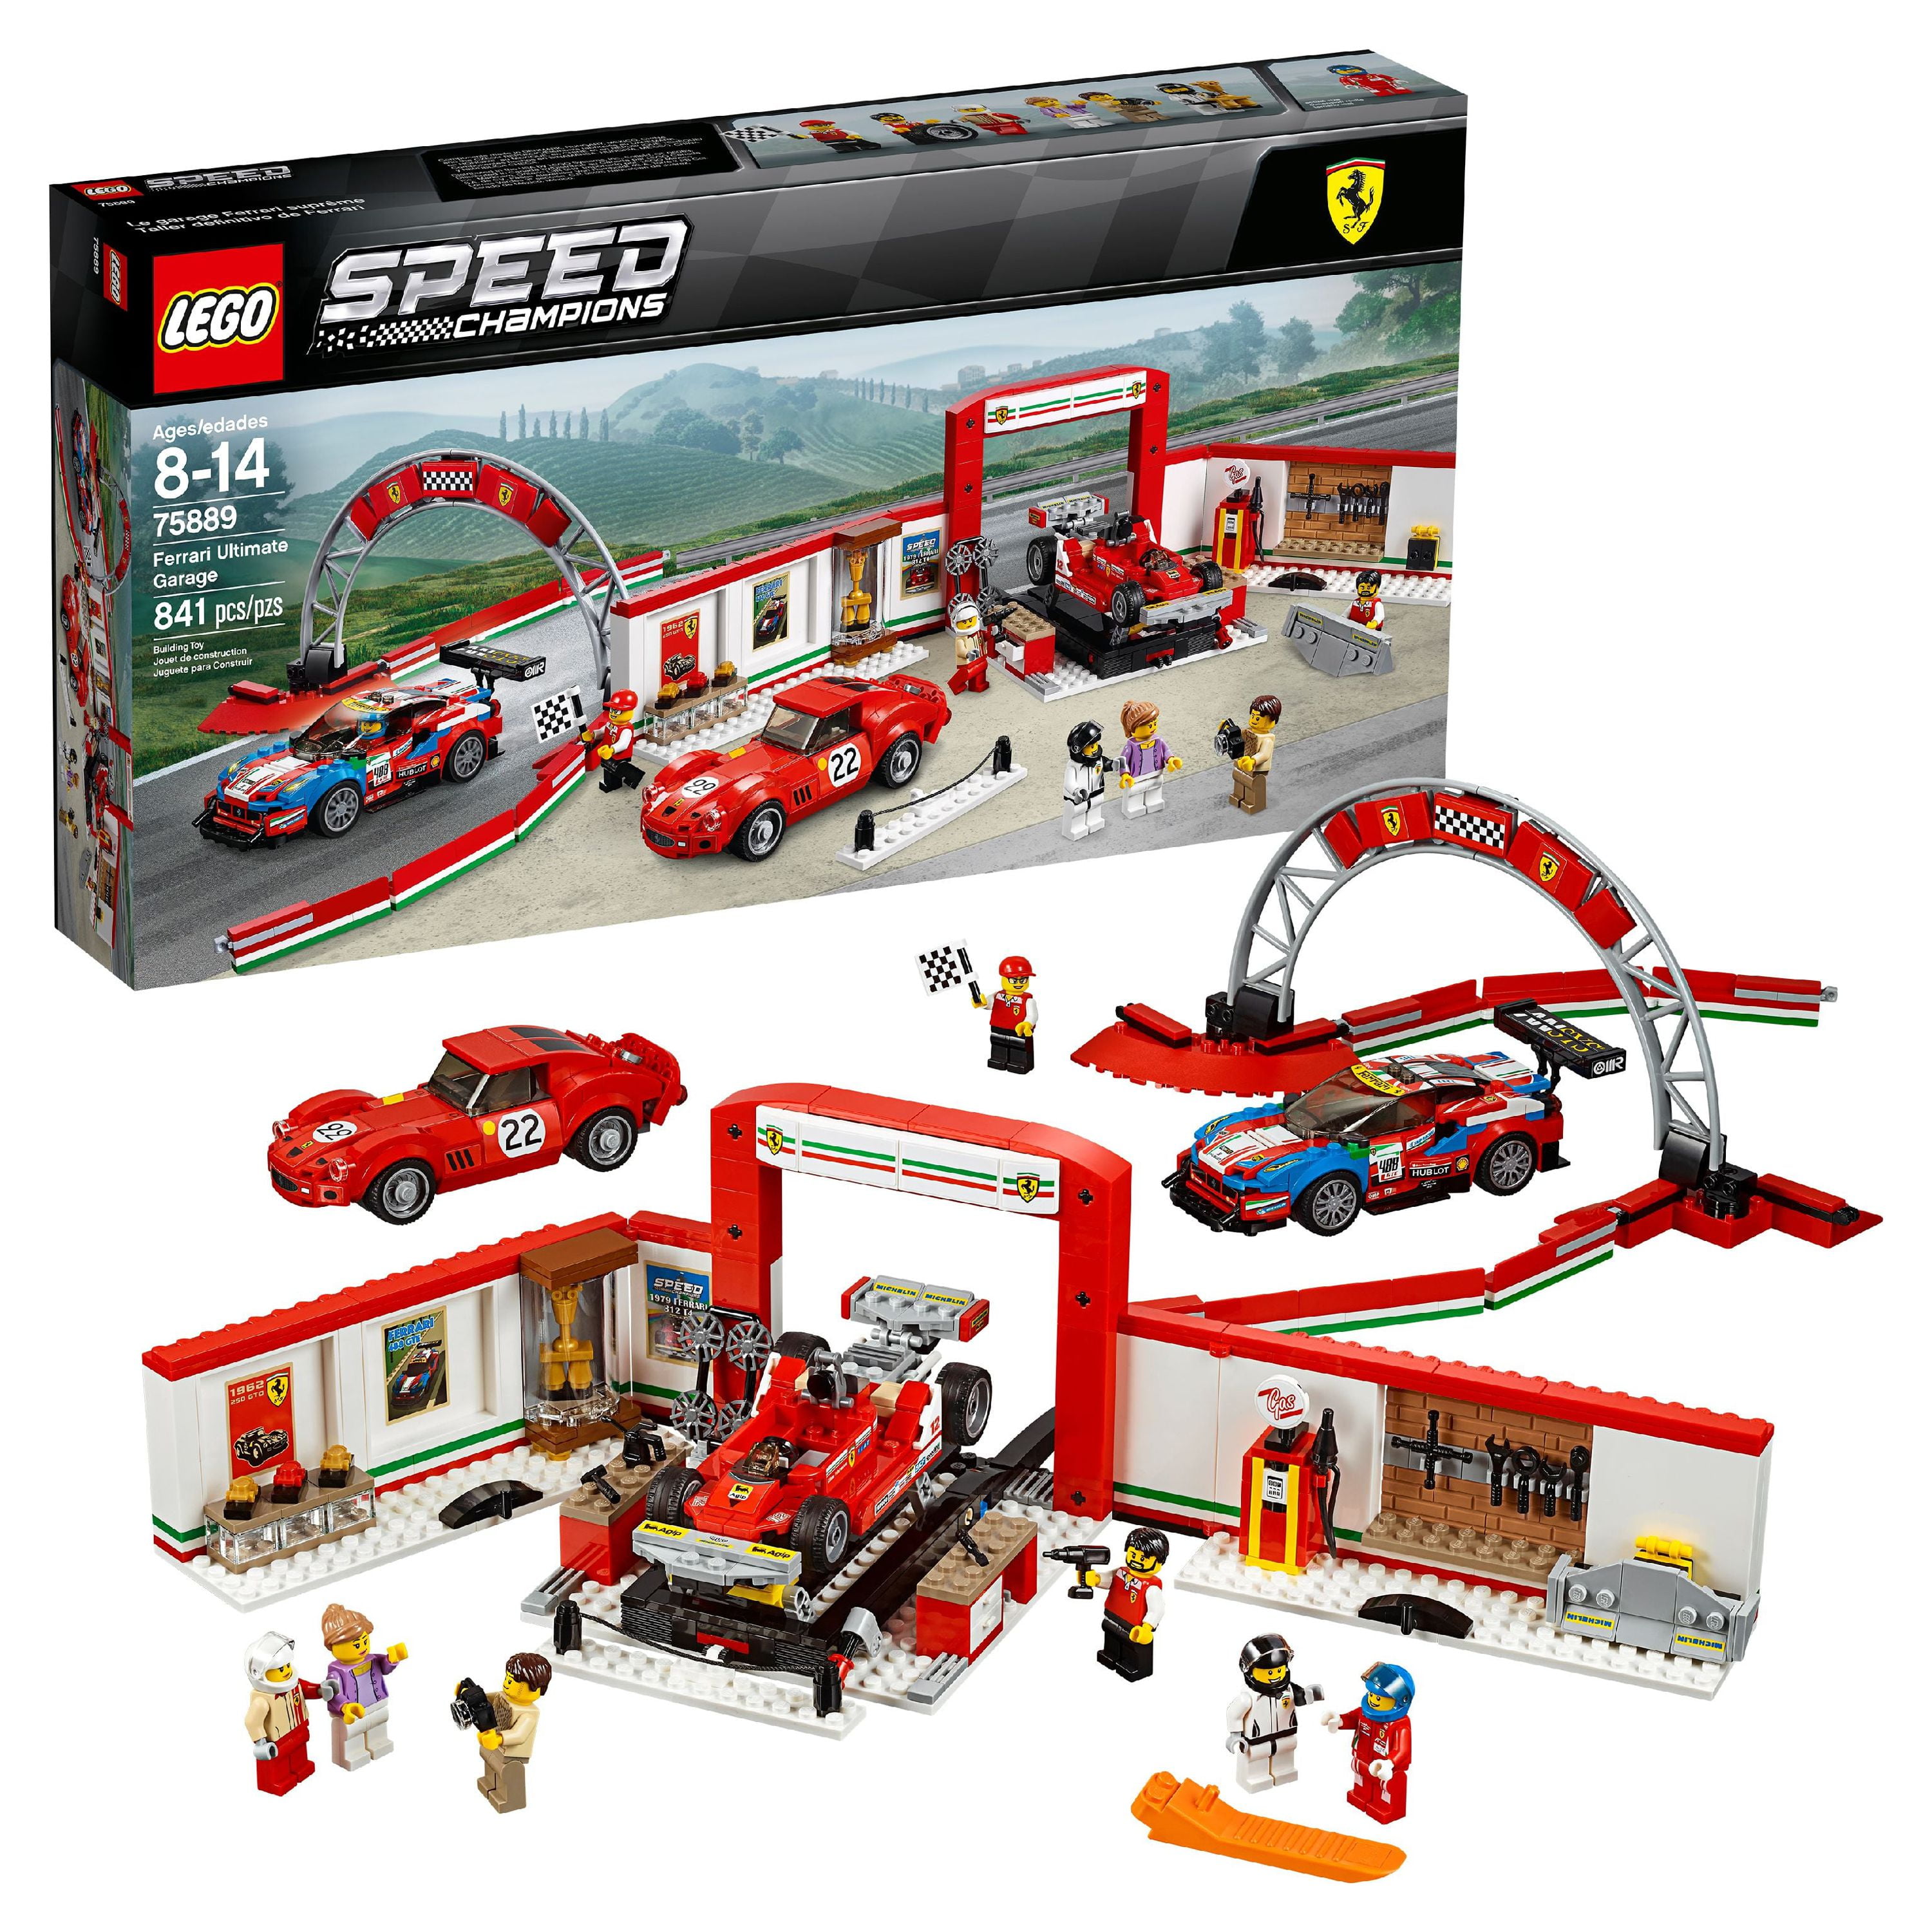 LEGO Speed Champions gets great deals on recent & retiring sets at Walmart  - Dexerto